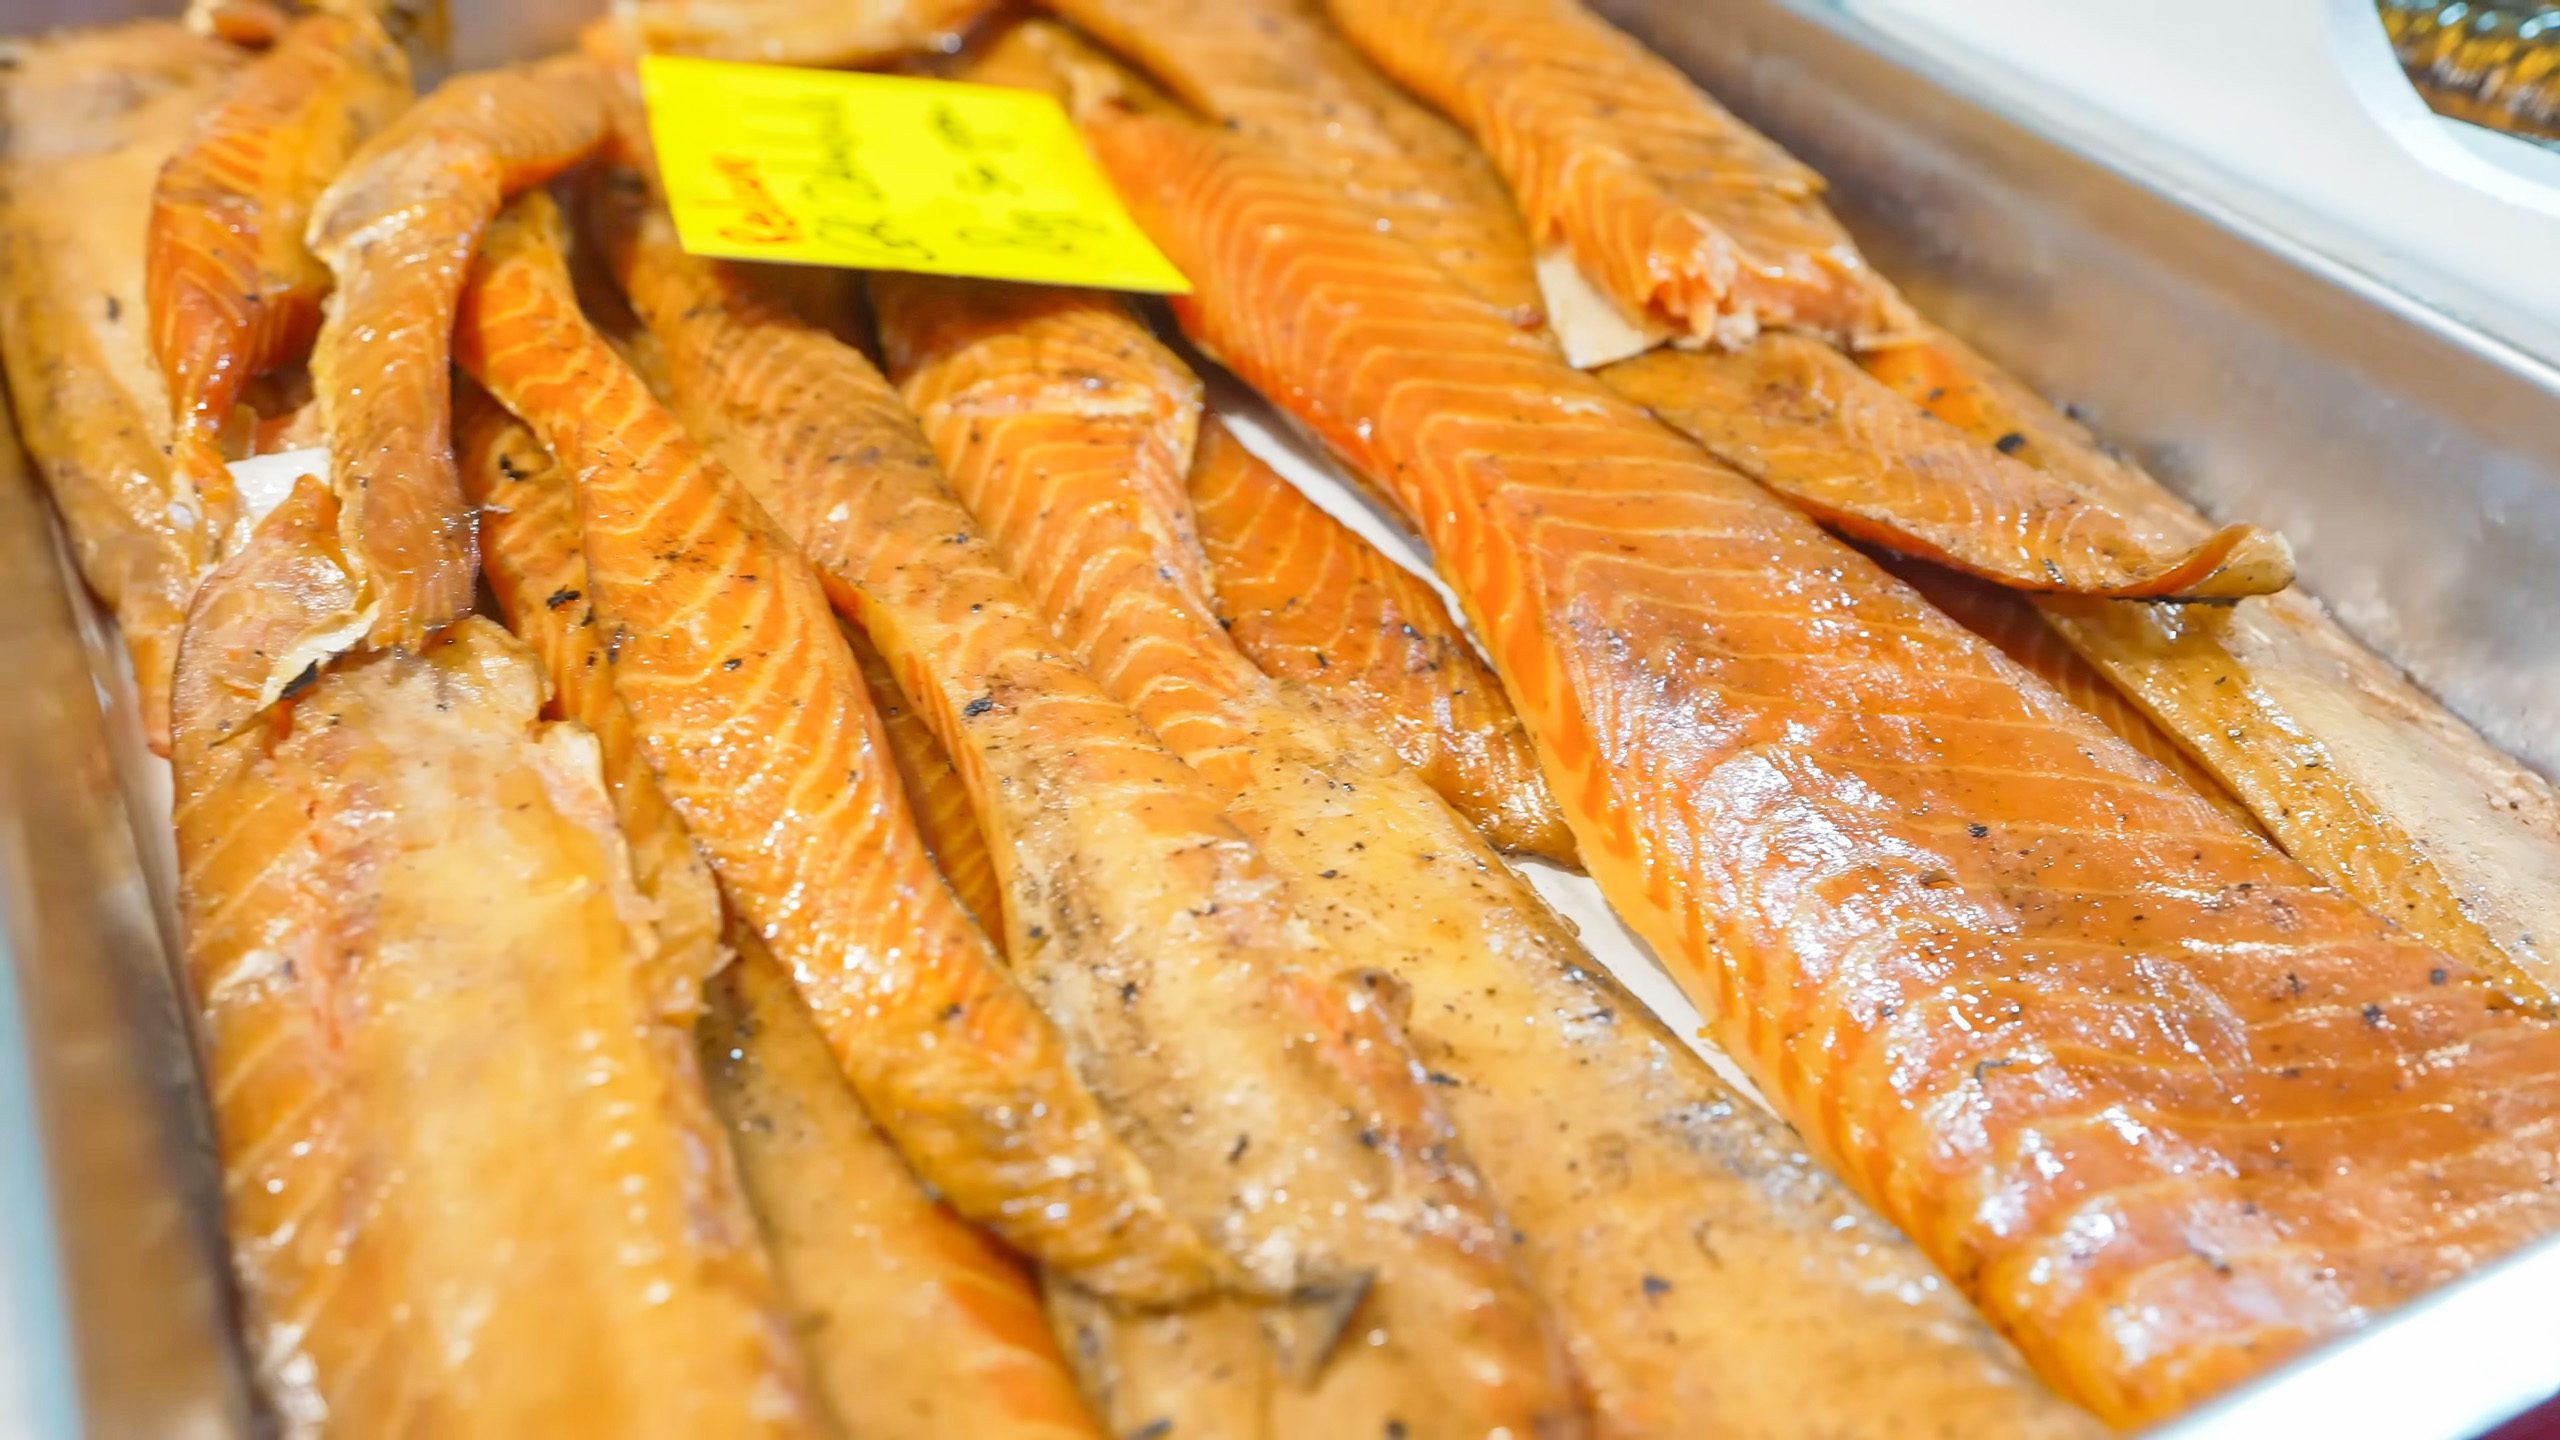 Several pieces of fresh salmon at Blaak Market | Davidsbeenhere